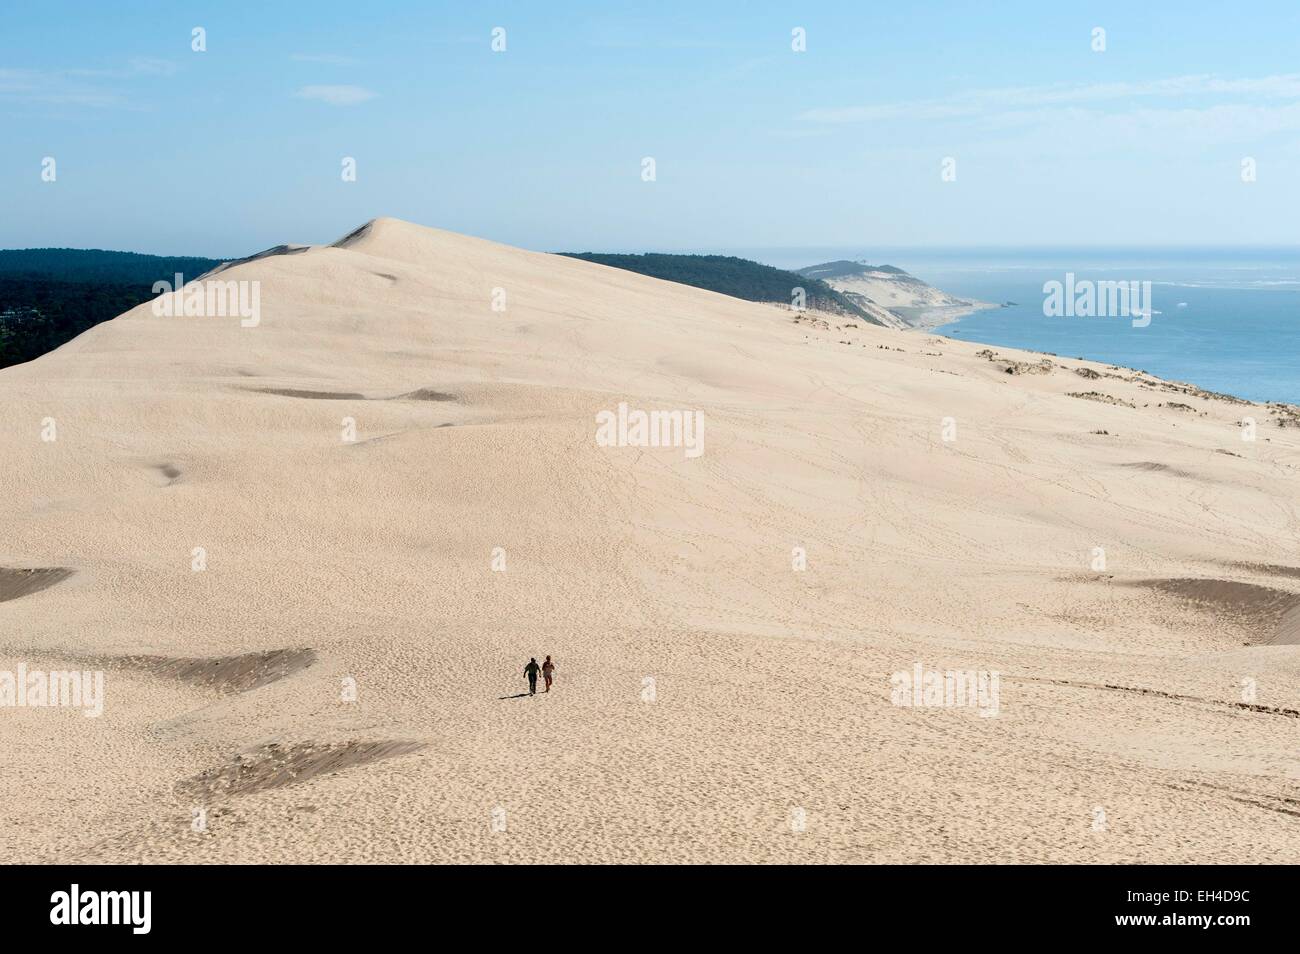 France, Gironde, La Teste de Buch, Pilat Dune is the highest dune in Europe (110m), couple walking on the dune Stock Photo